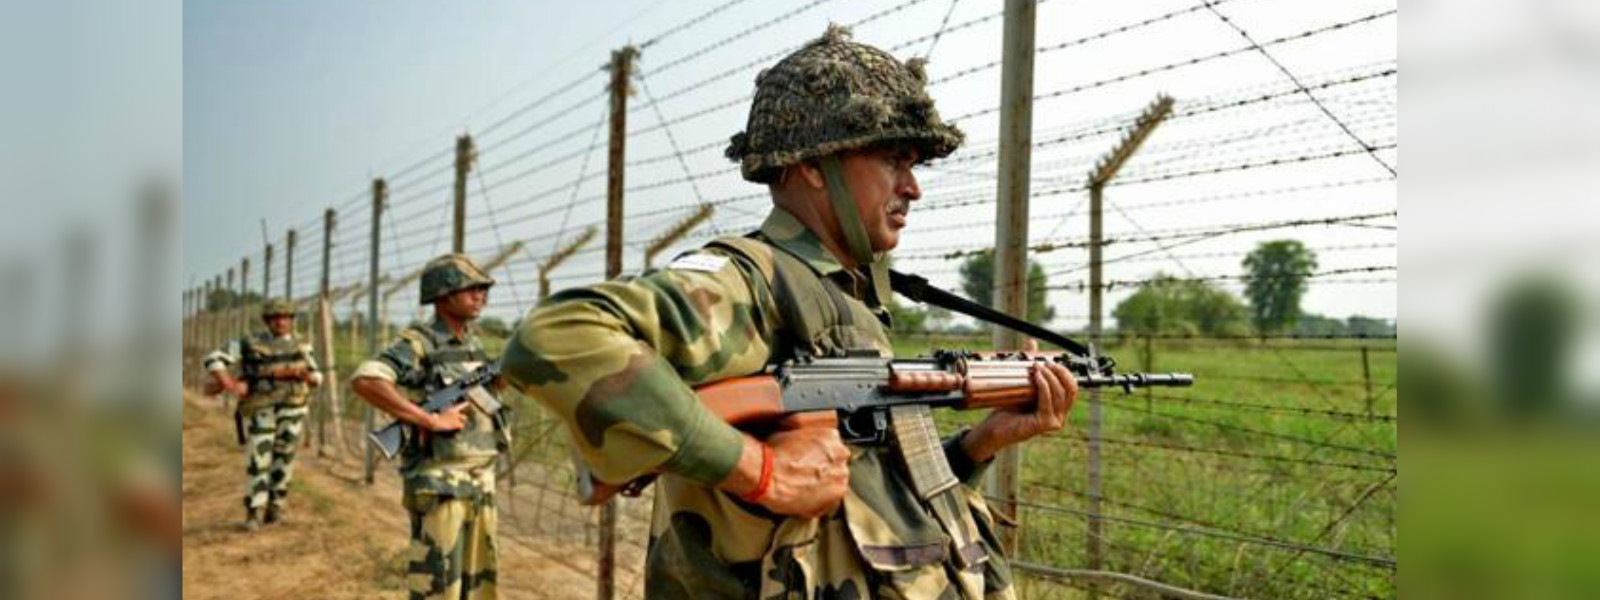 Security forces gun down 3 militants in Kashmir   